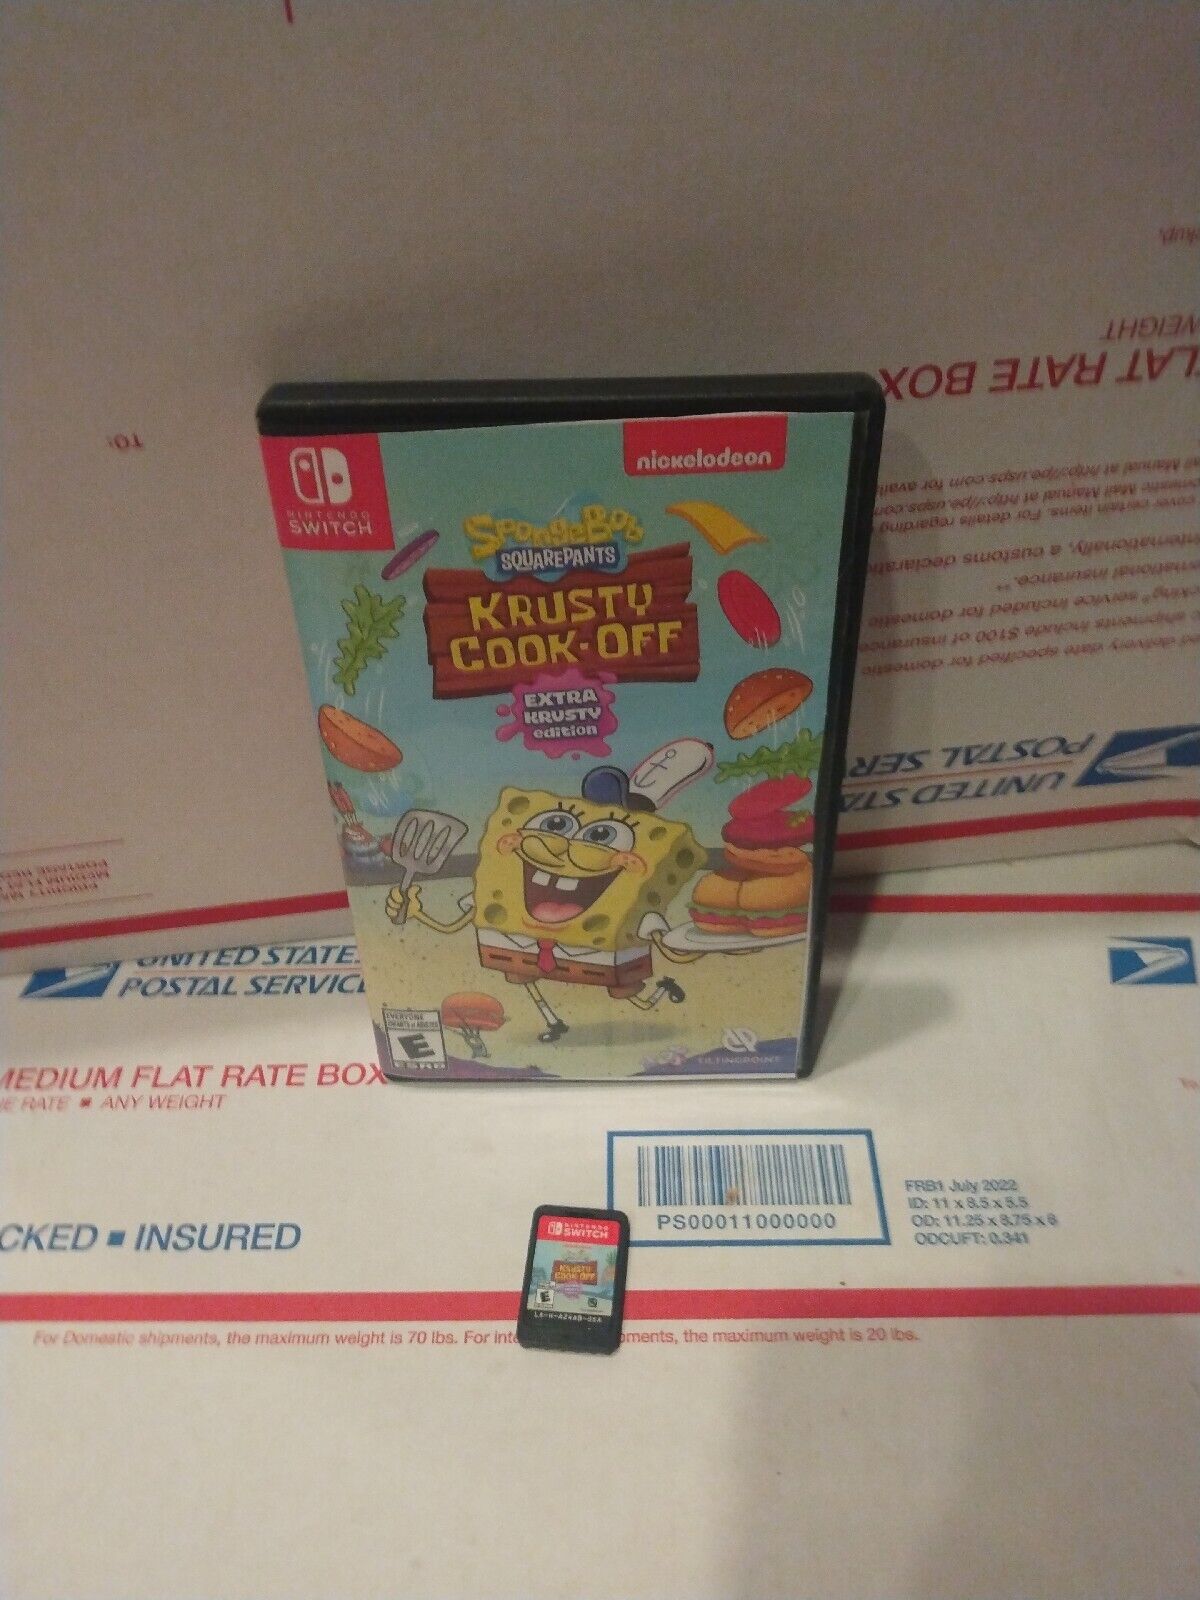 Spongebob | Nintendo Edition eBay Cook-Off Krusty Krusty Extra Switch